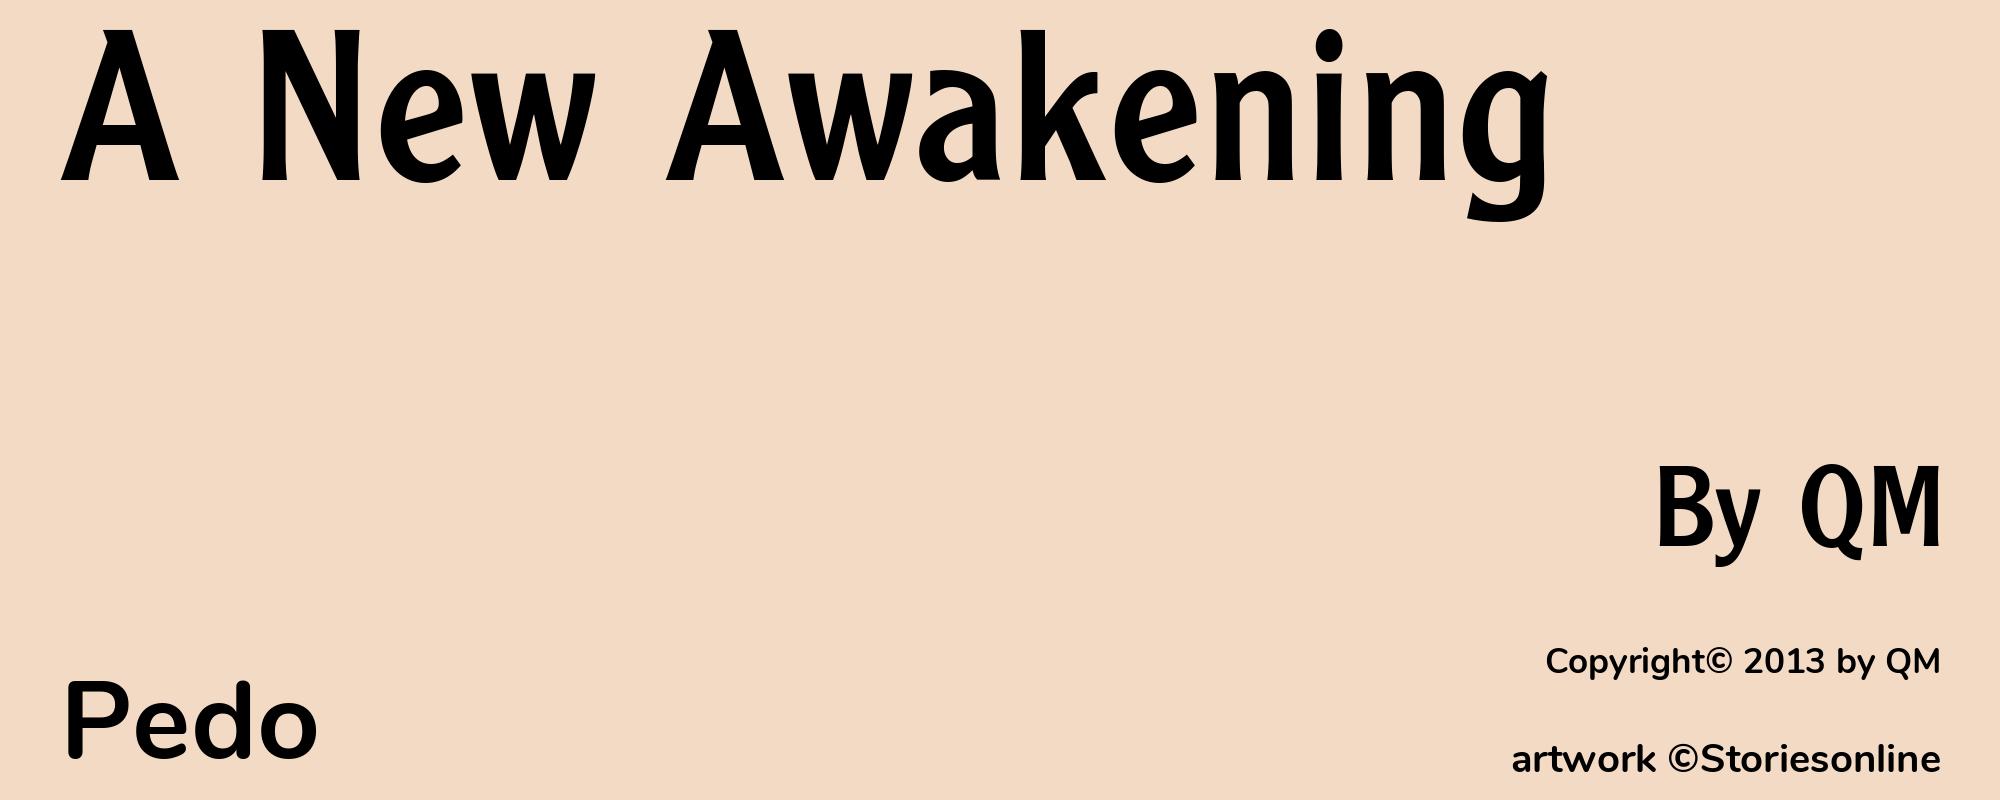 A New Awakening - Cover